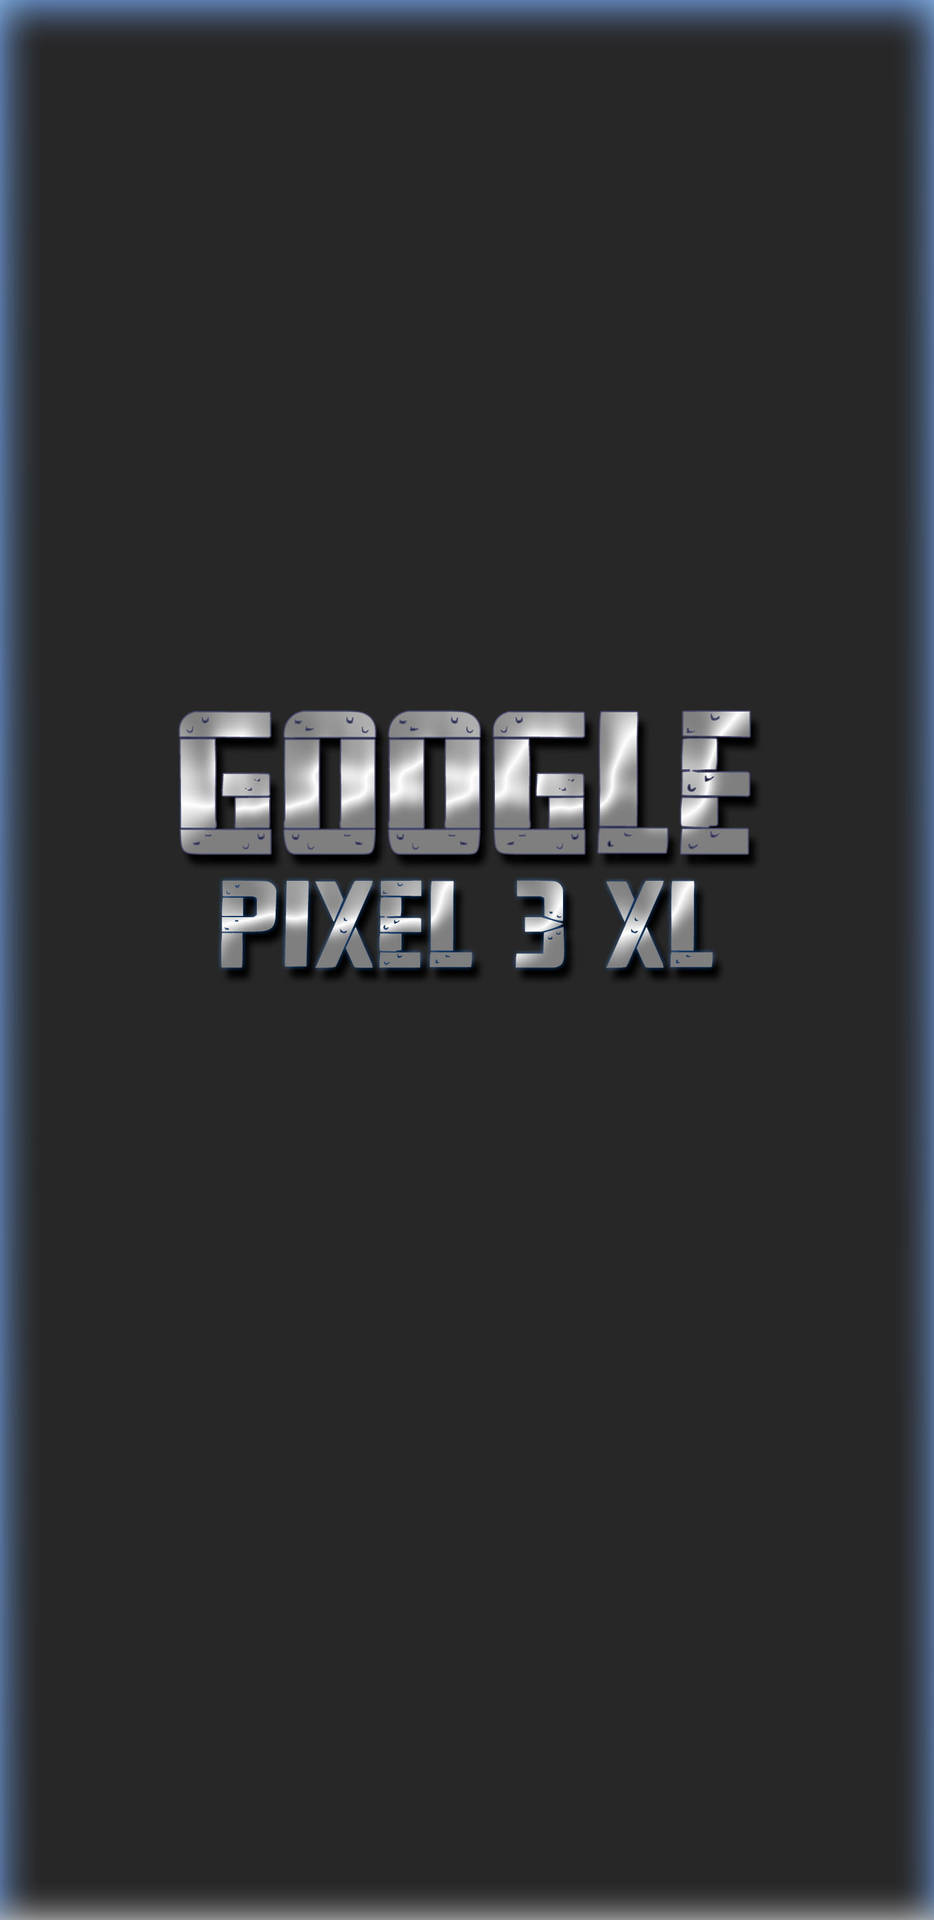 Pixel 3 Xl Pictures Wallpaper